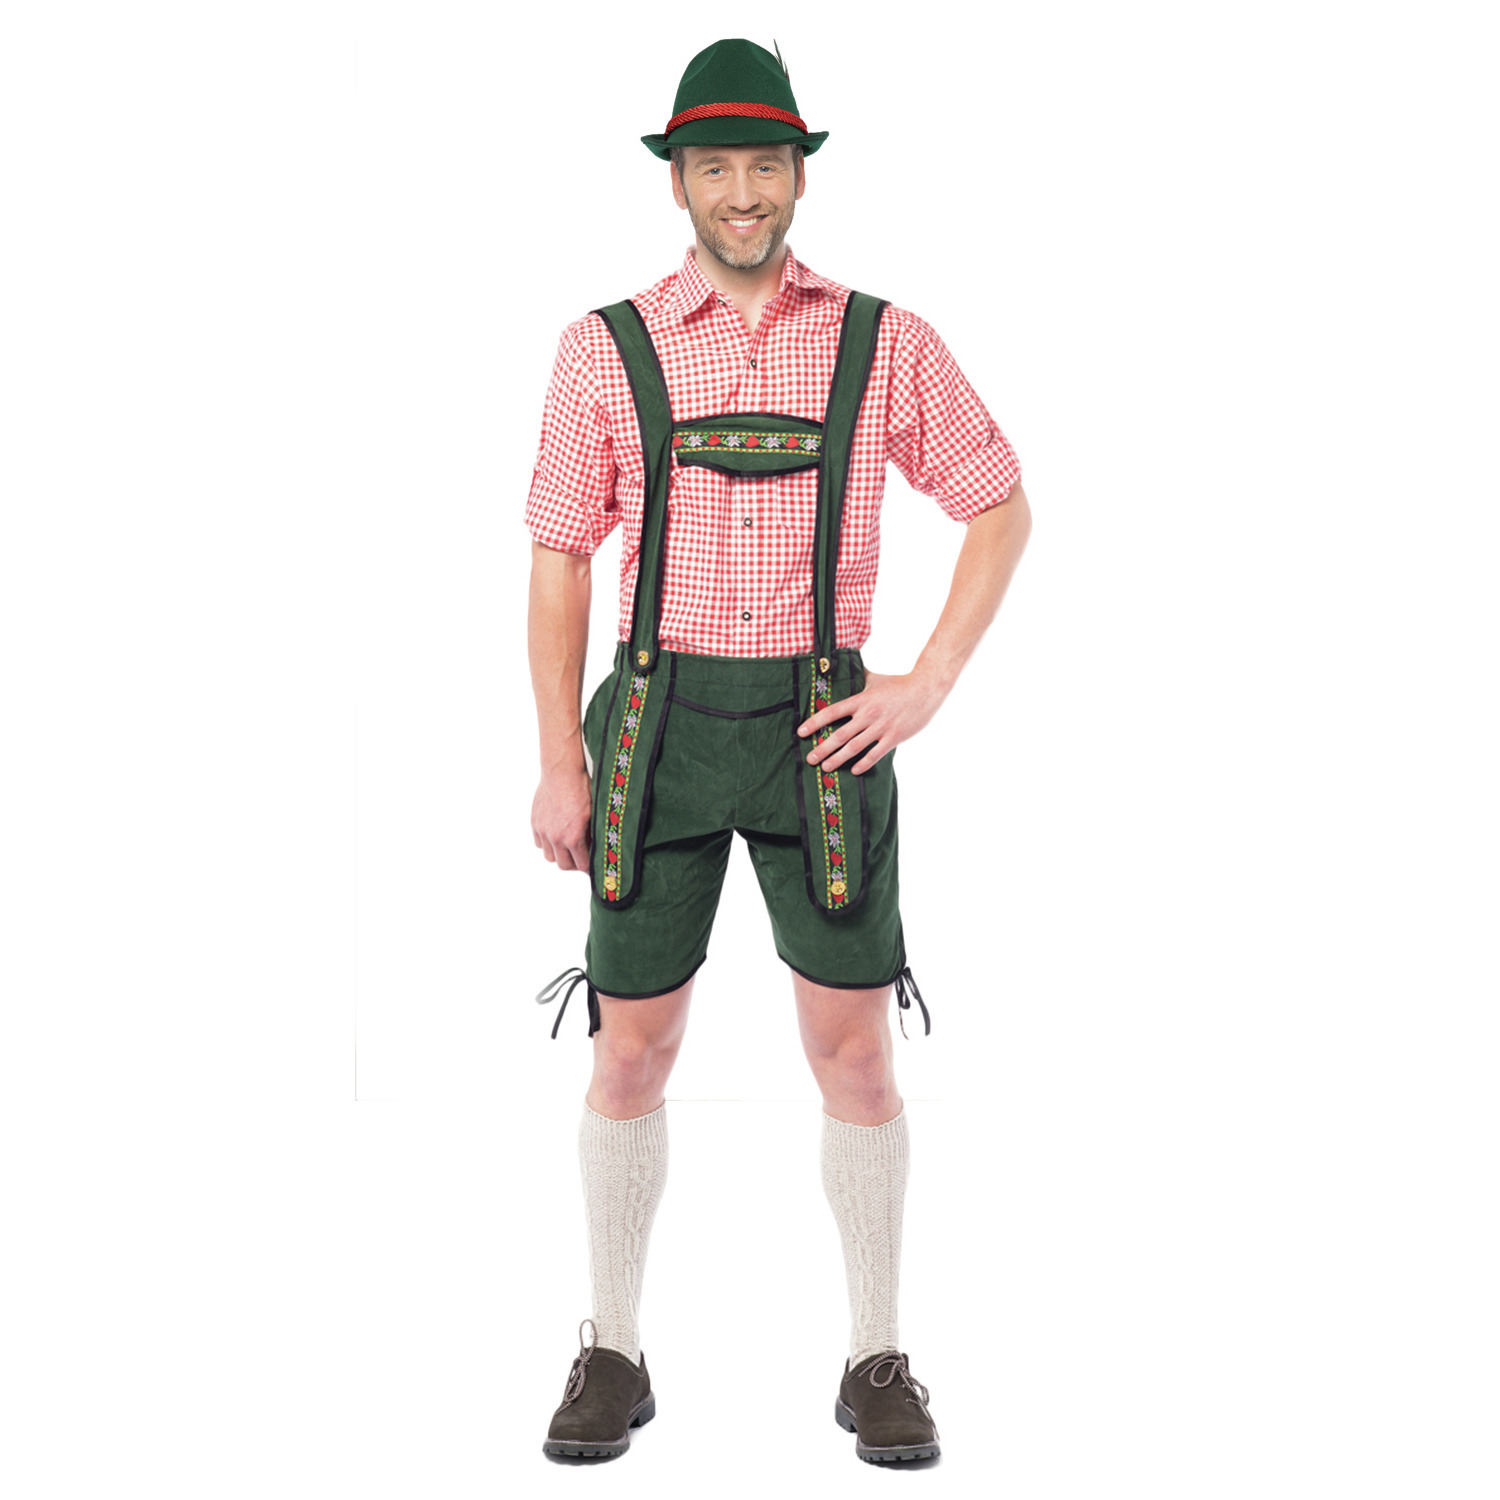 Tiroler lederhosen kort groen voor mannen